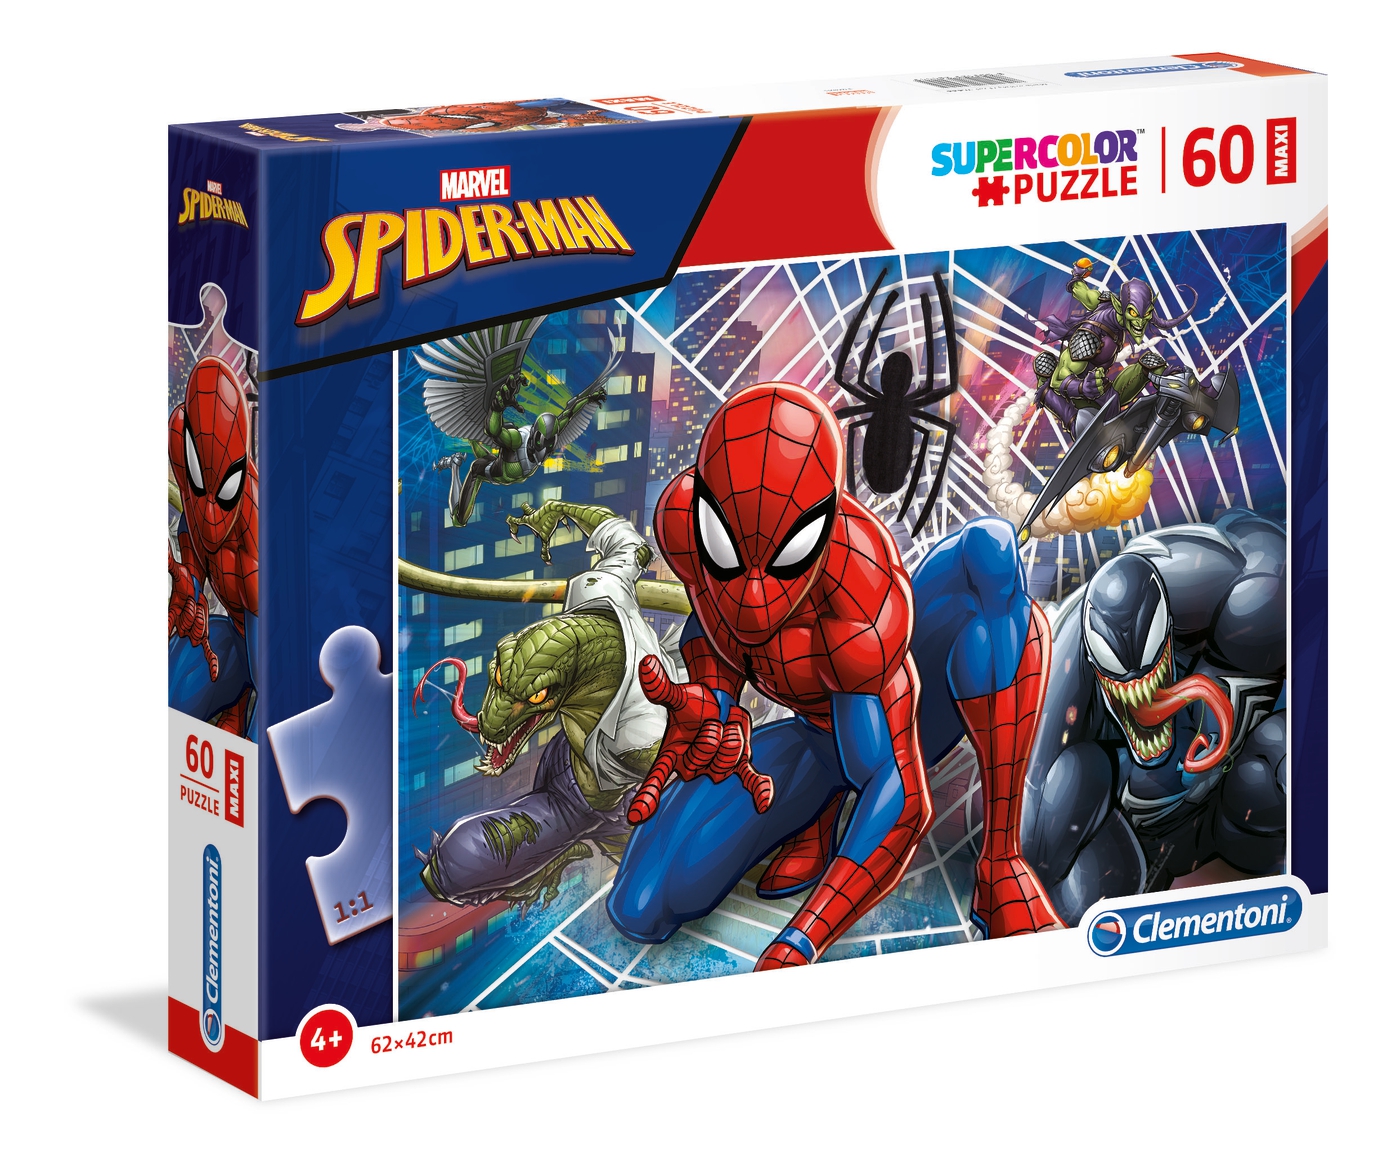 Marvel Spider-Man 60 - Supercolor Puzzle - Clementoni